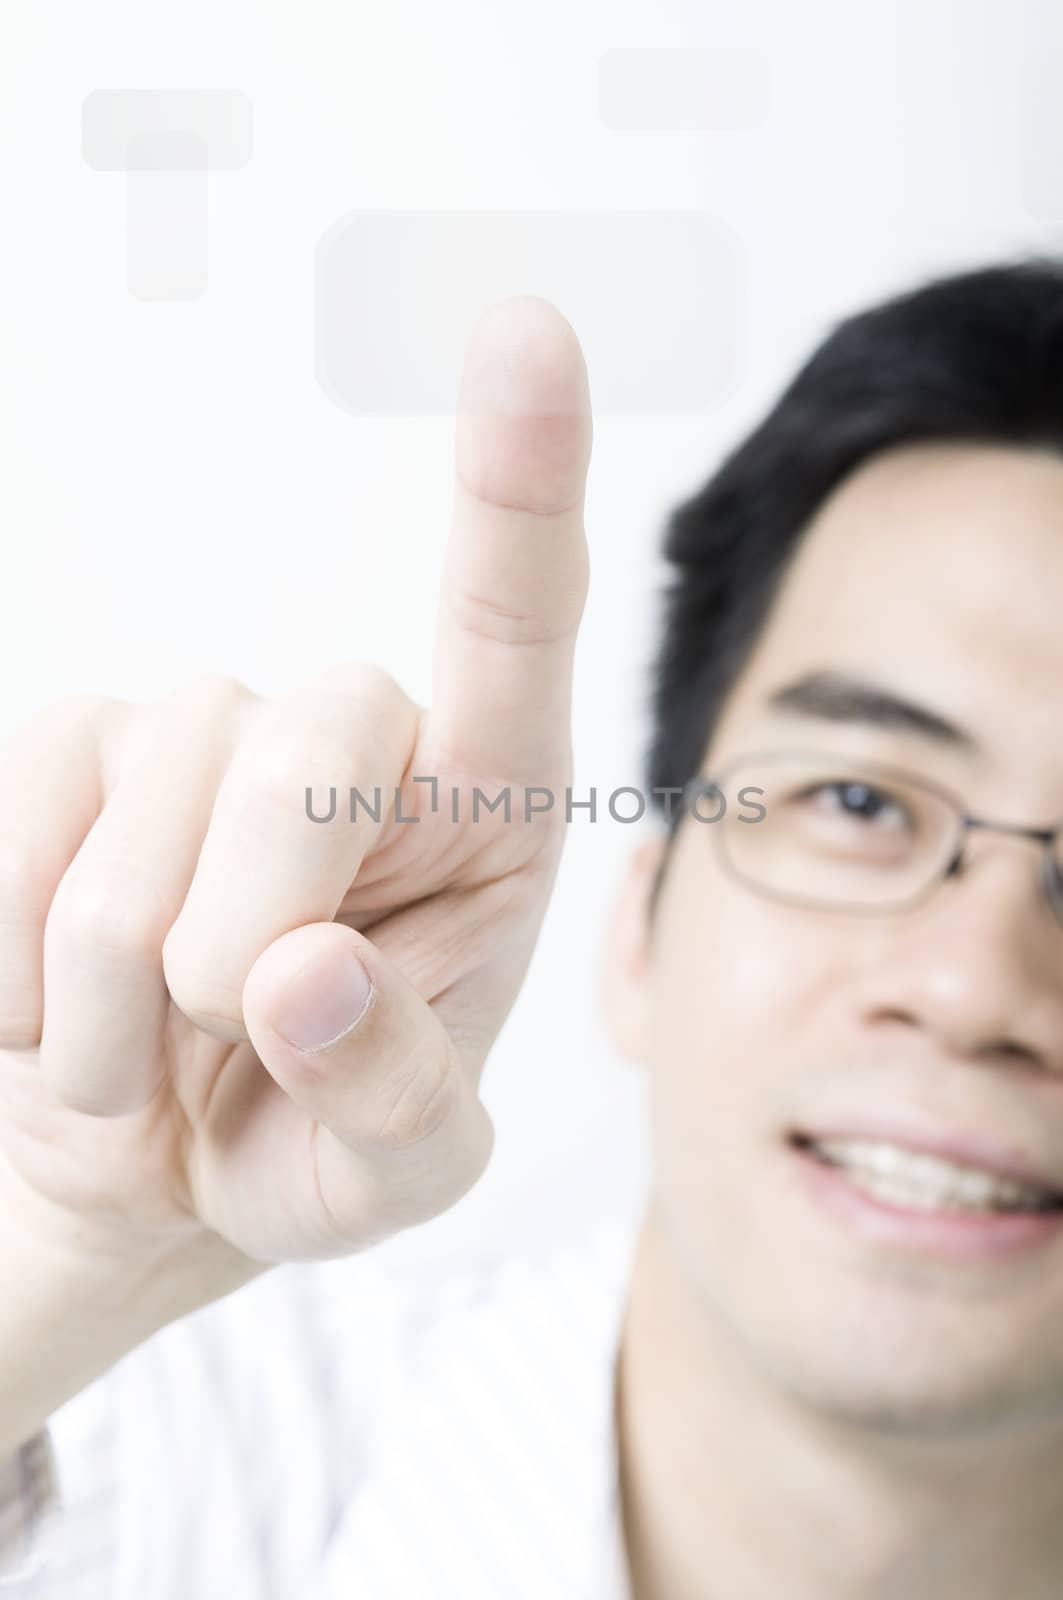 Asian business man pressing a touchscreen button  by yuliang11